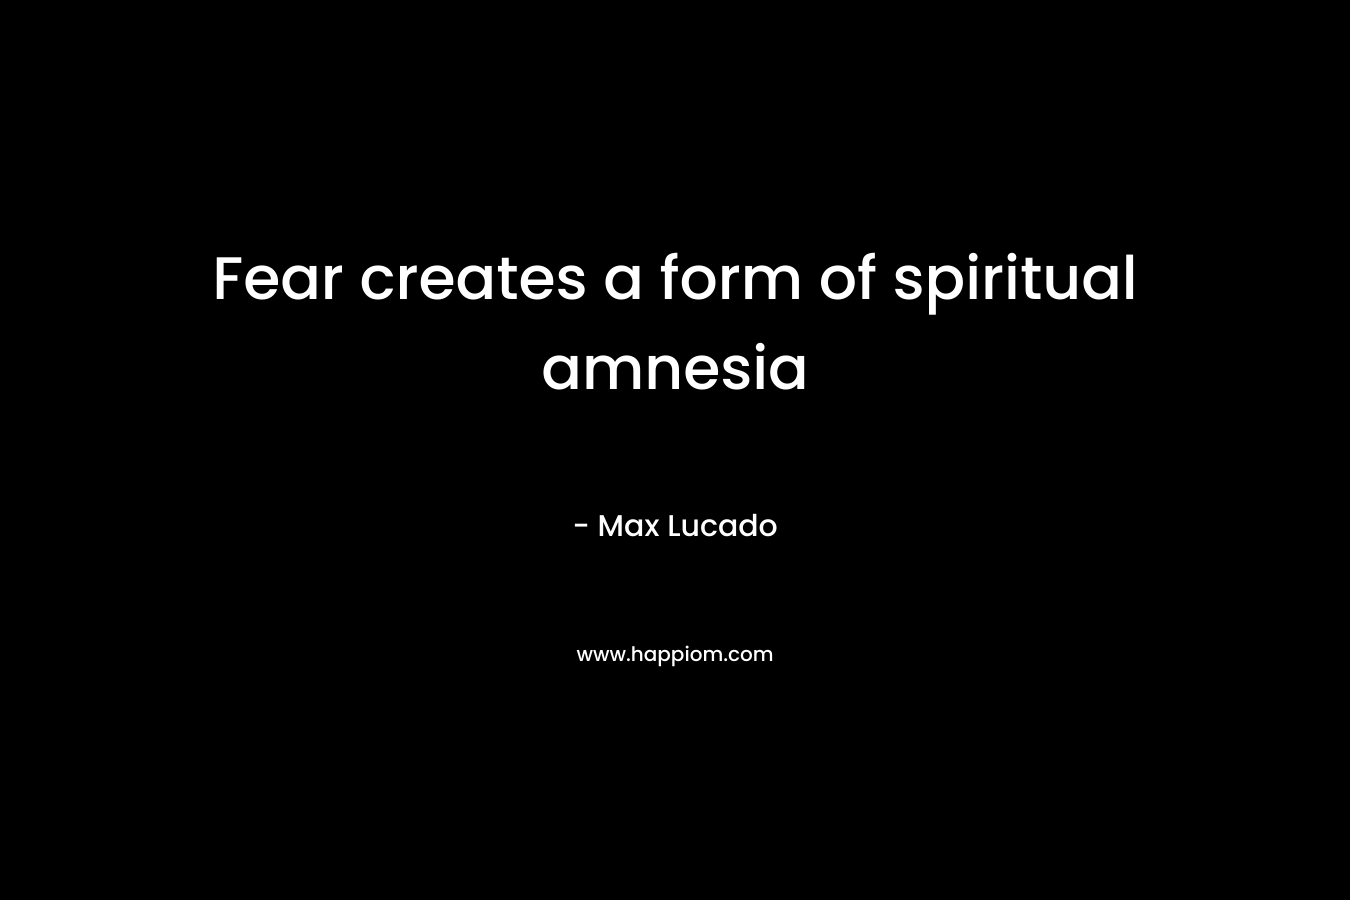 Fear creates a form of spiritual amnesia